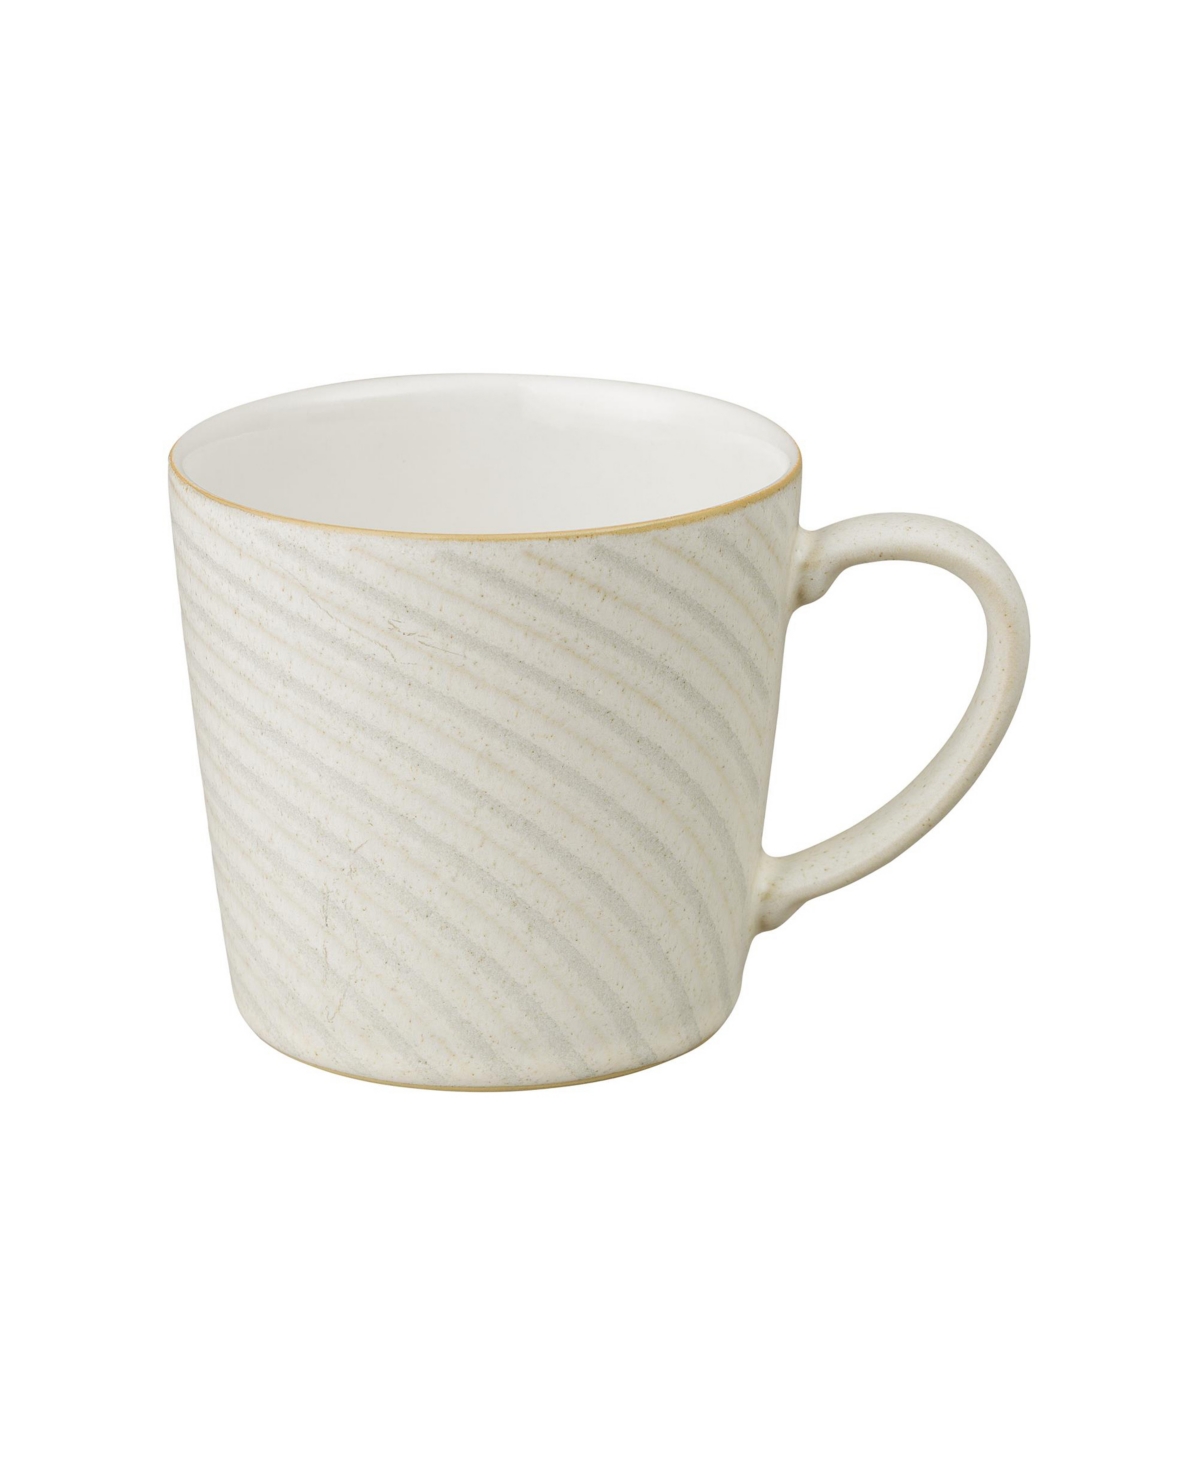 Impression Accent Large Mug - Cream